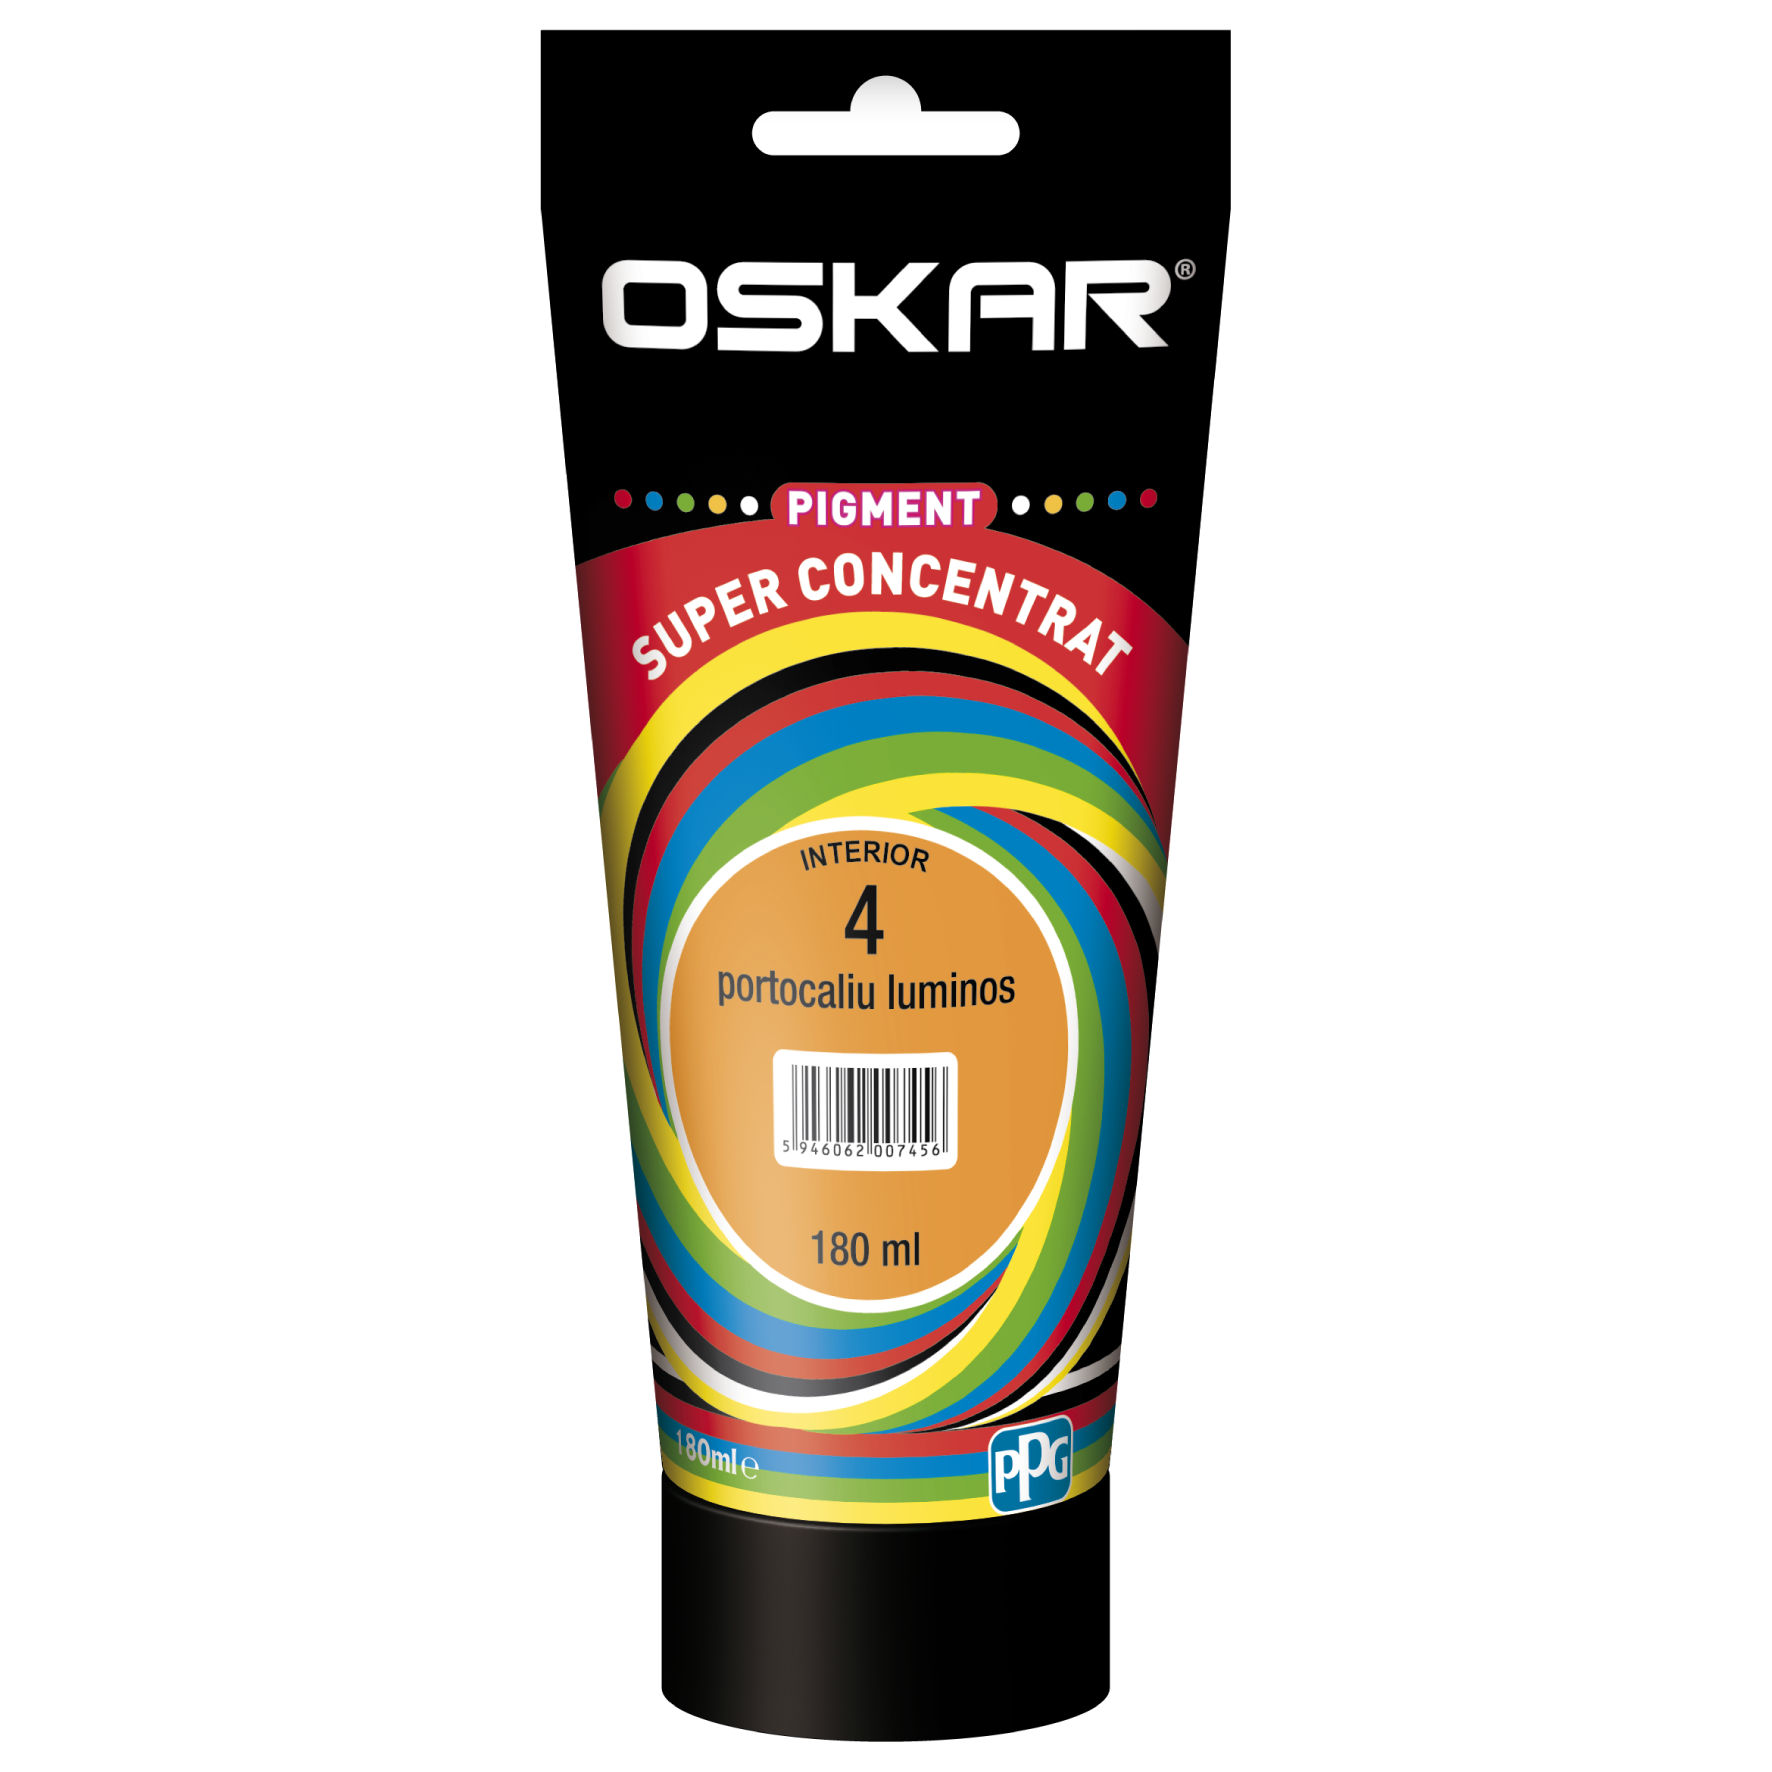 Pigment vopsea lavabila Oskar super concentrat, portocaliu luminos 4, 180 ml 180